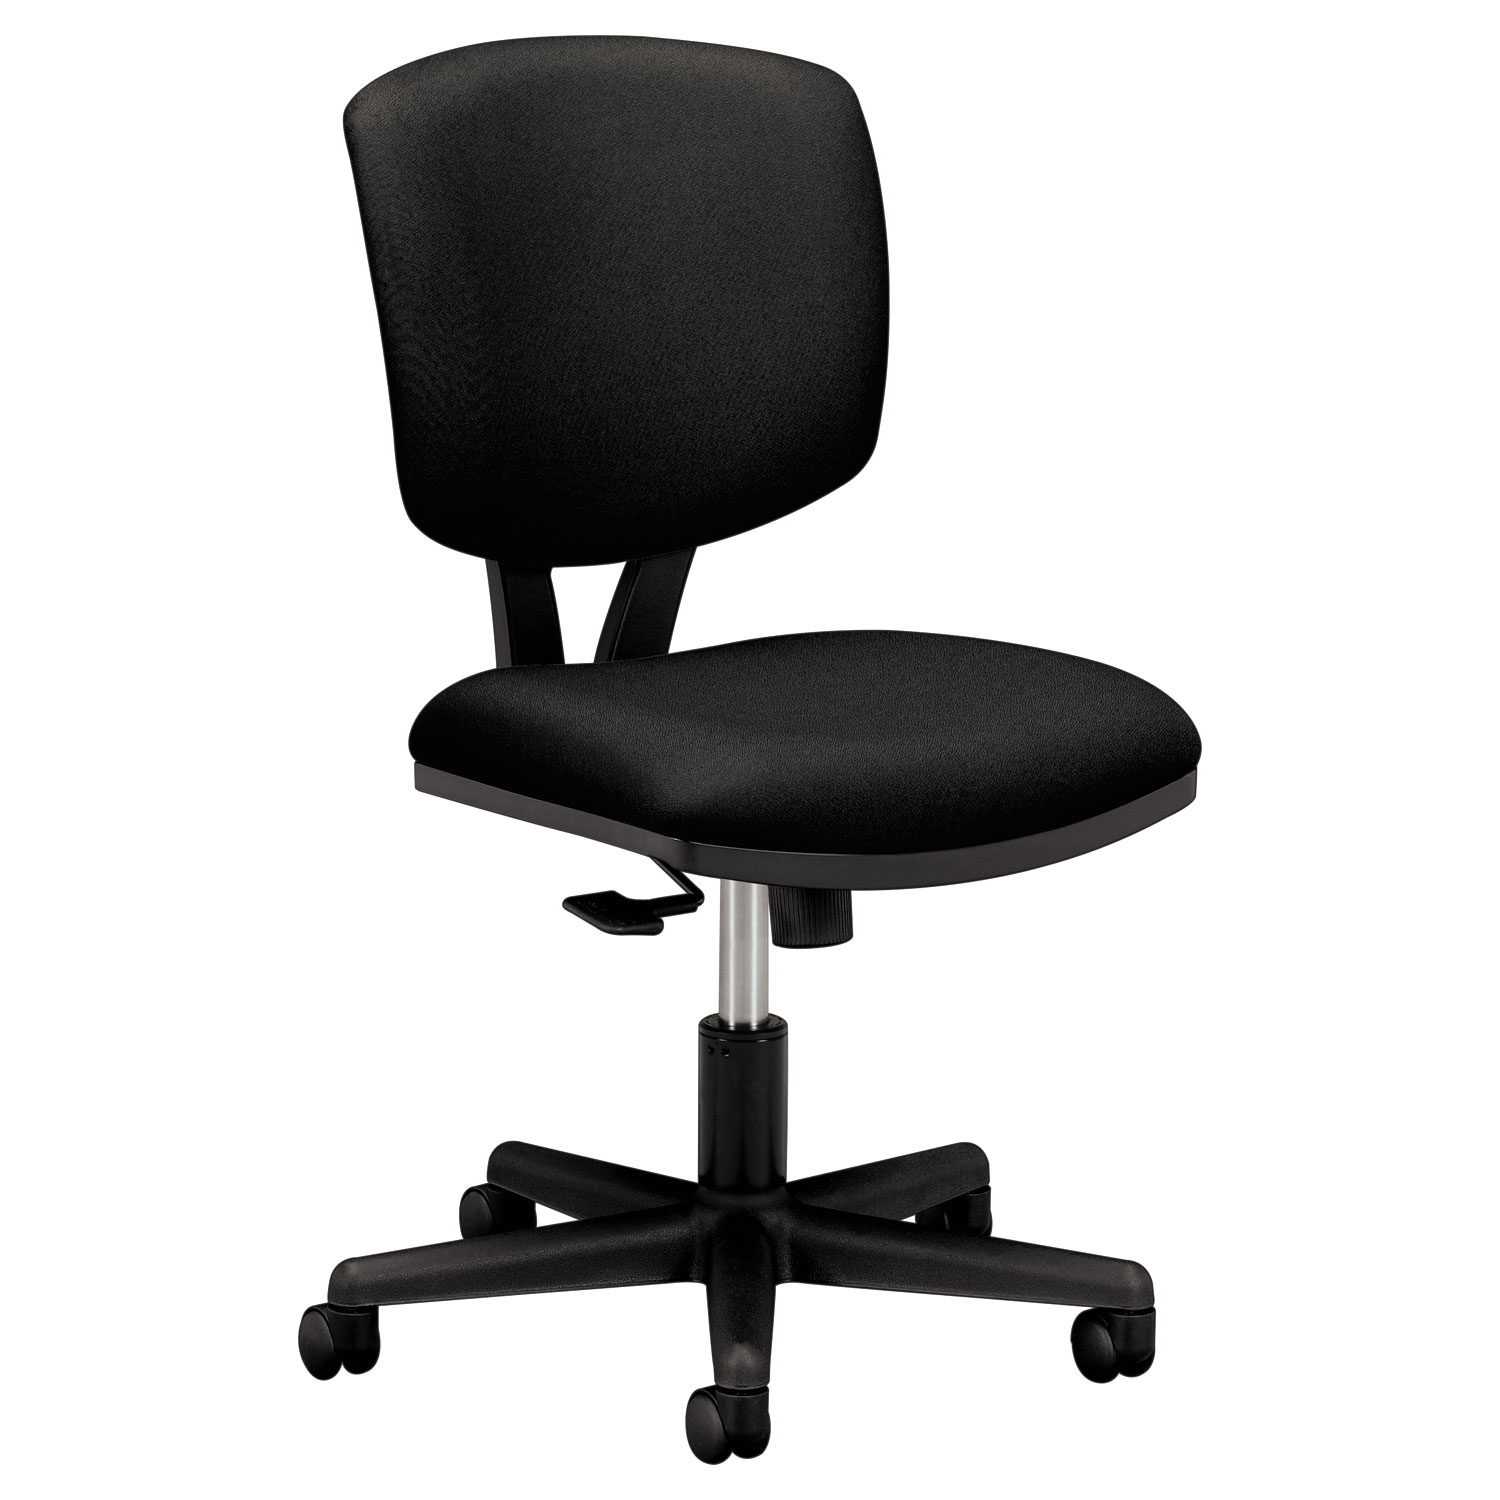  HON H5703.GA10.T Volt Series Task Chair with Synchro-Tilt, Supports up to 250 lbs., Black Seat/Black Back, Black Base (HON5703GA10T) 